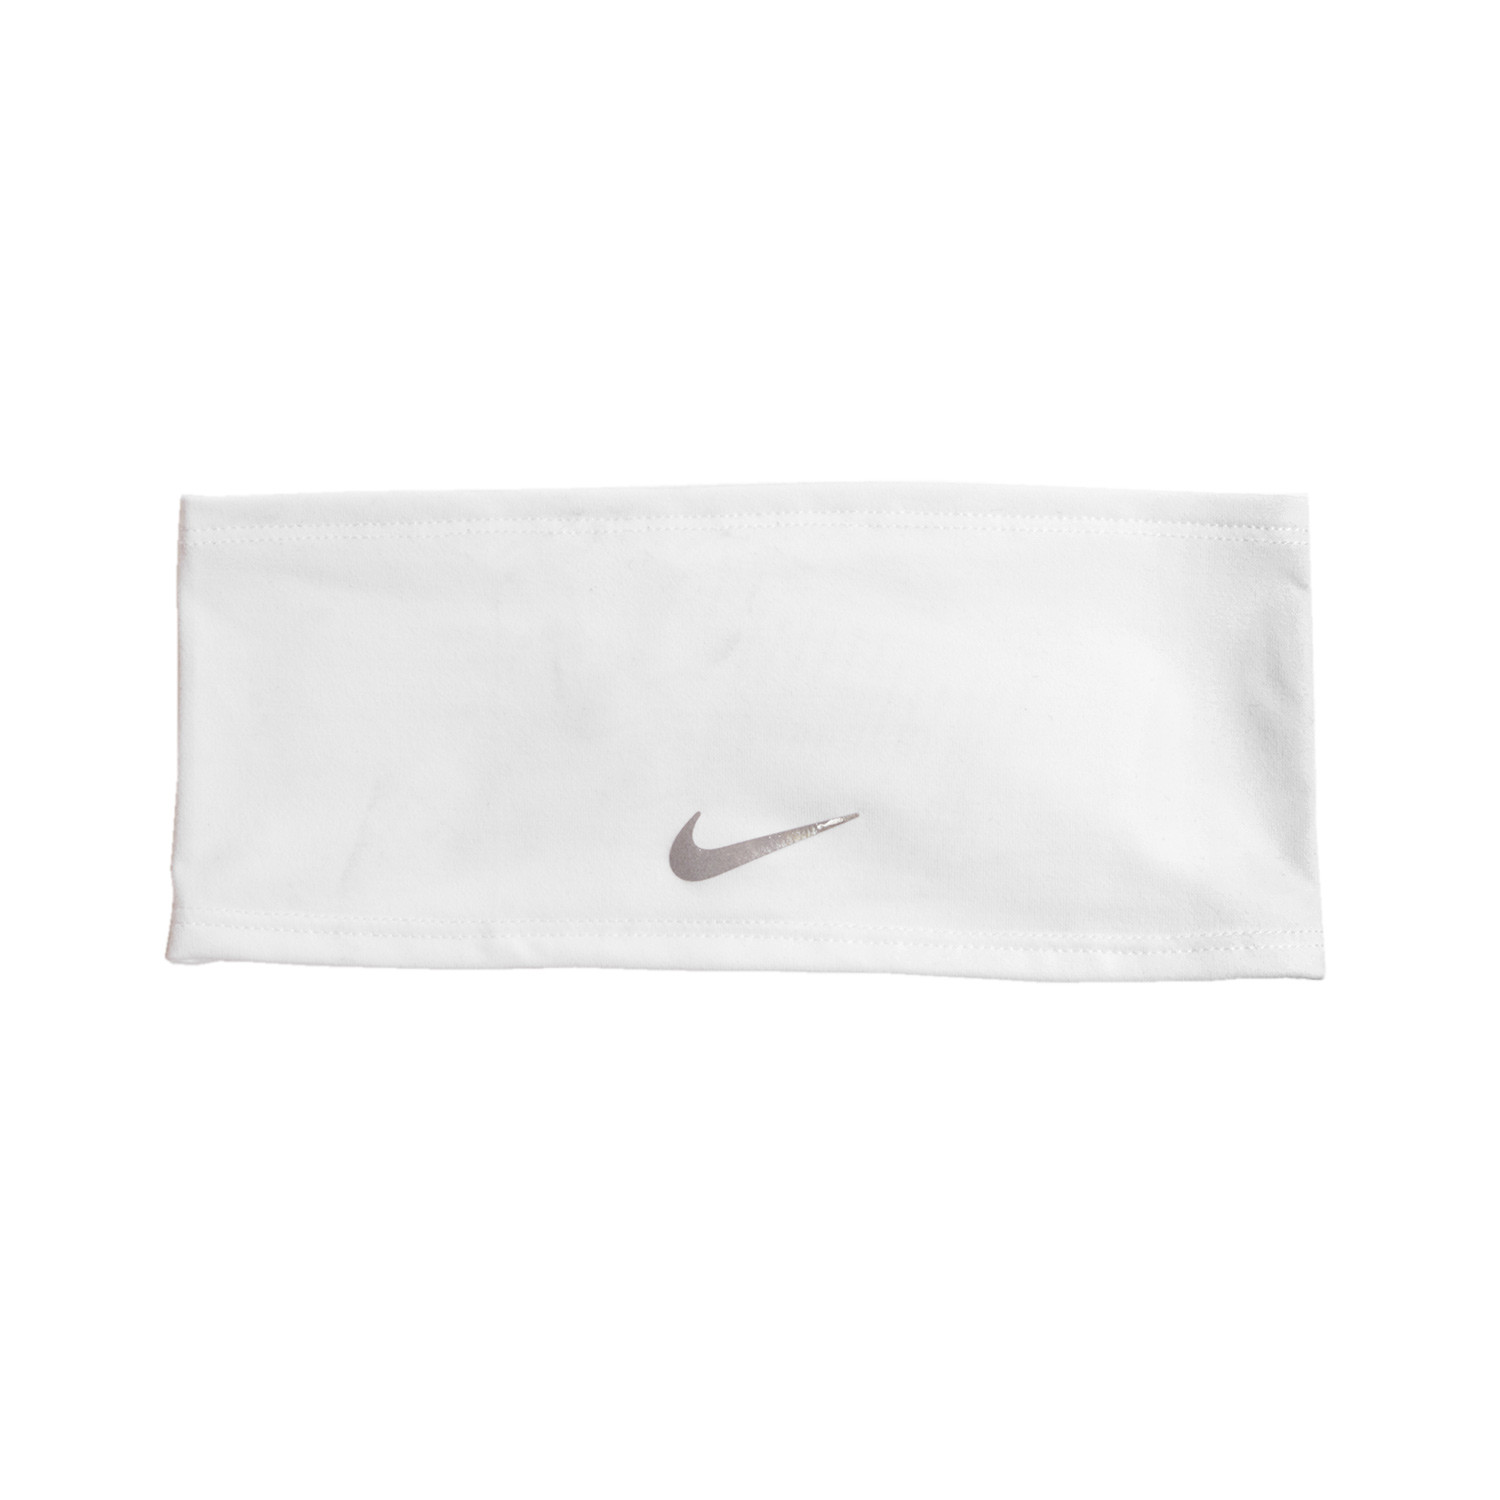 Cinta de elástica Nike Dri-Fit Swoosh 2.0 blanca futbolmania